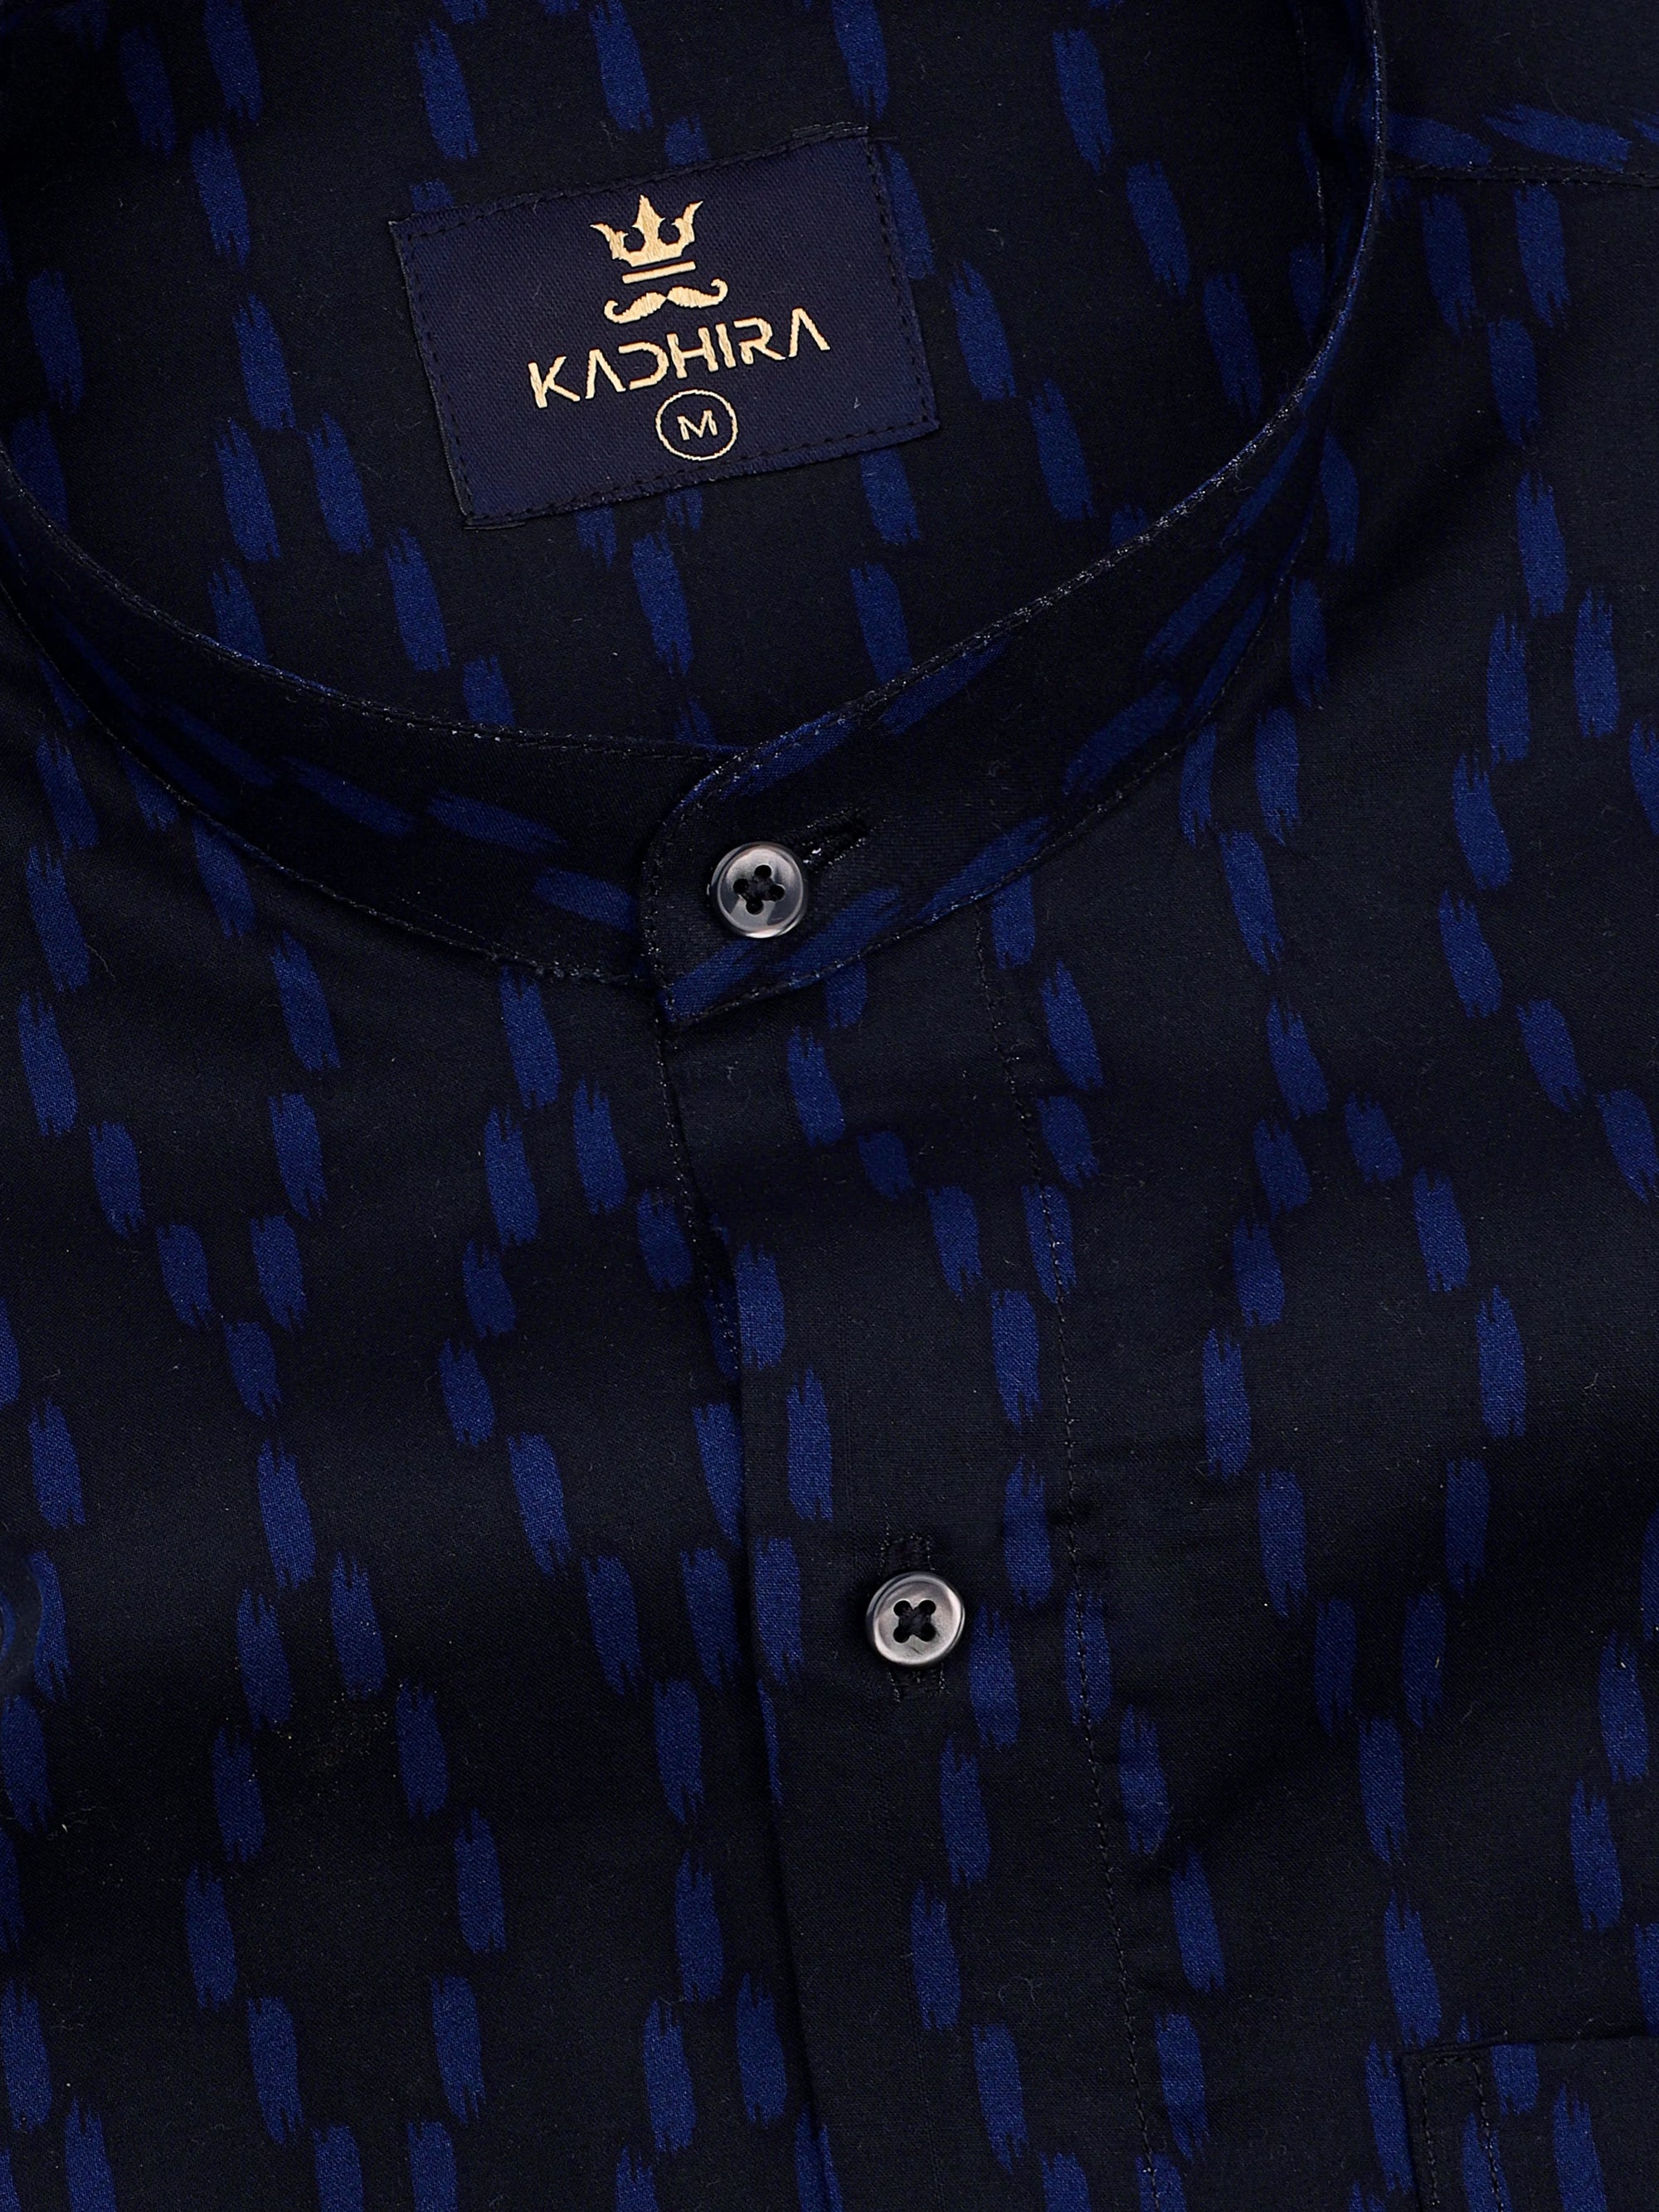 Crow Black With Persian Blue Ikat Patterns Printed Premium Cotton Shirt